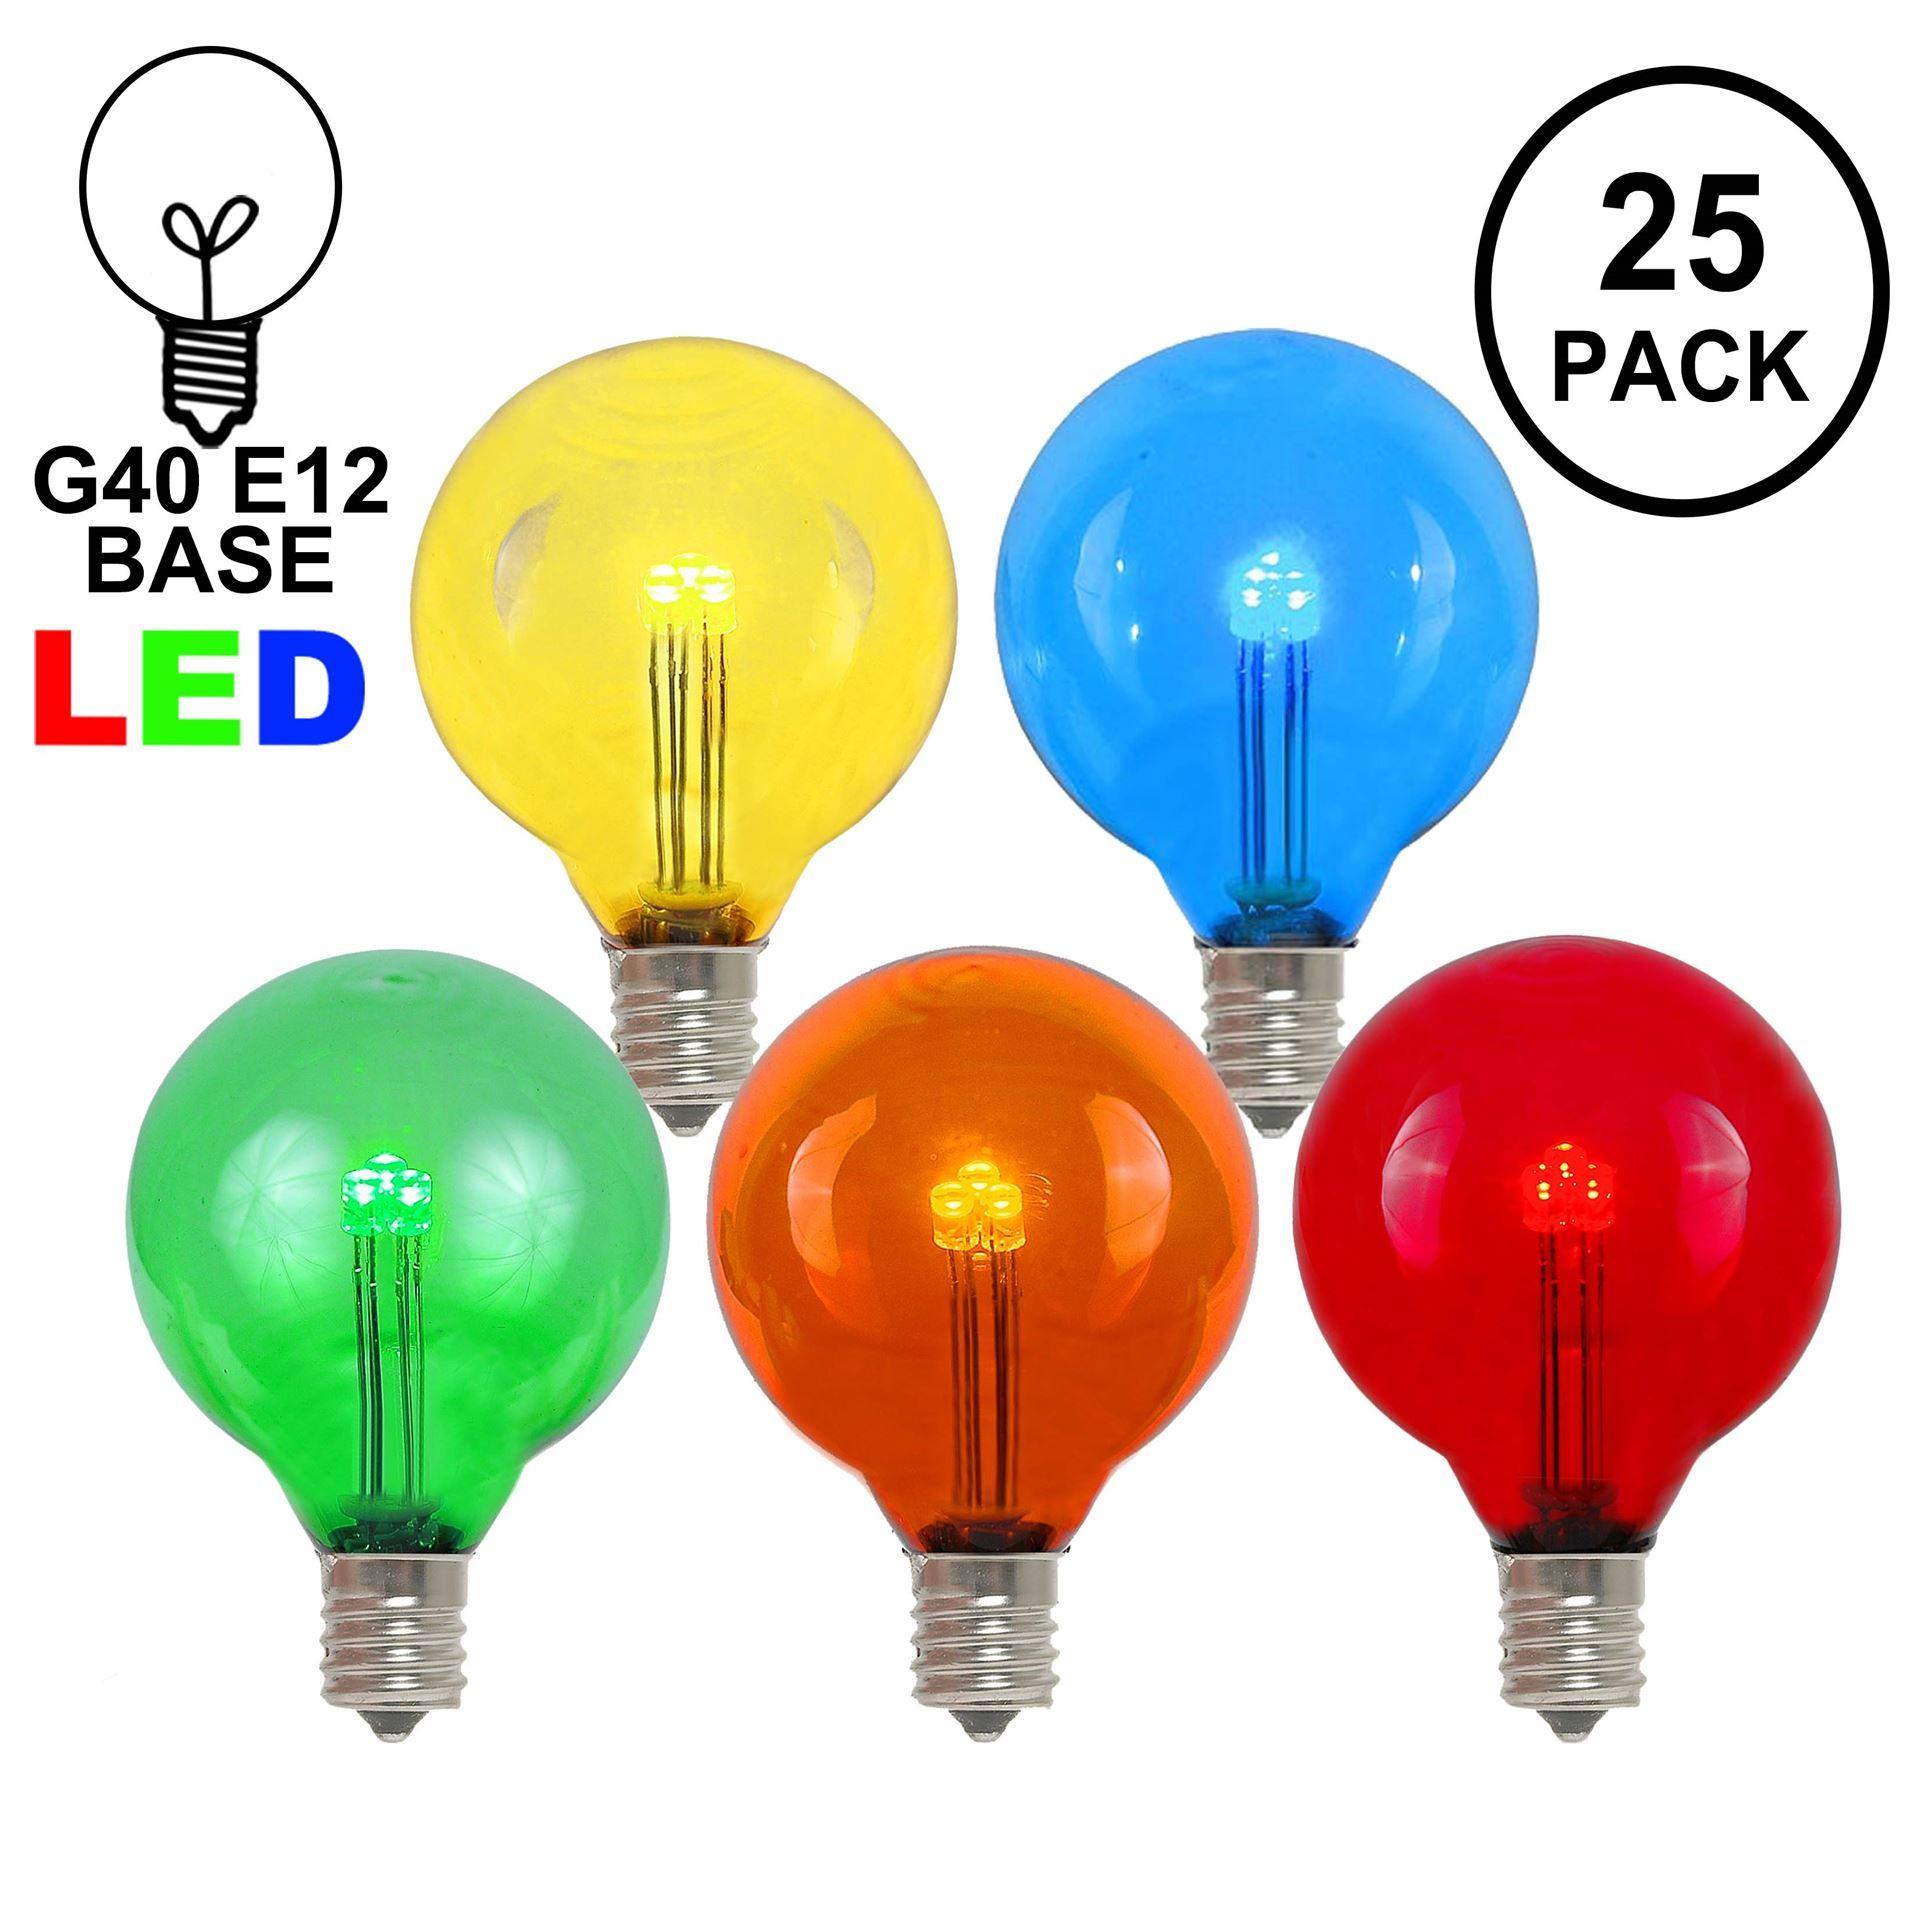 Multicolored Globe Logo - Buy Multi Colored LED G40 Glass Globe Light Bulbs - Novelty Lights